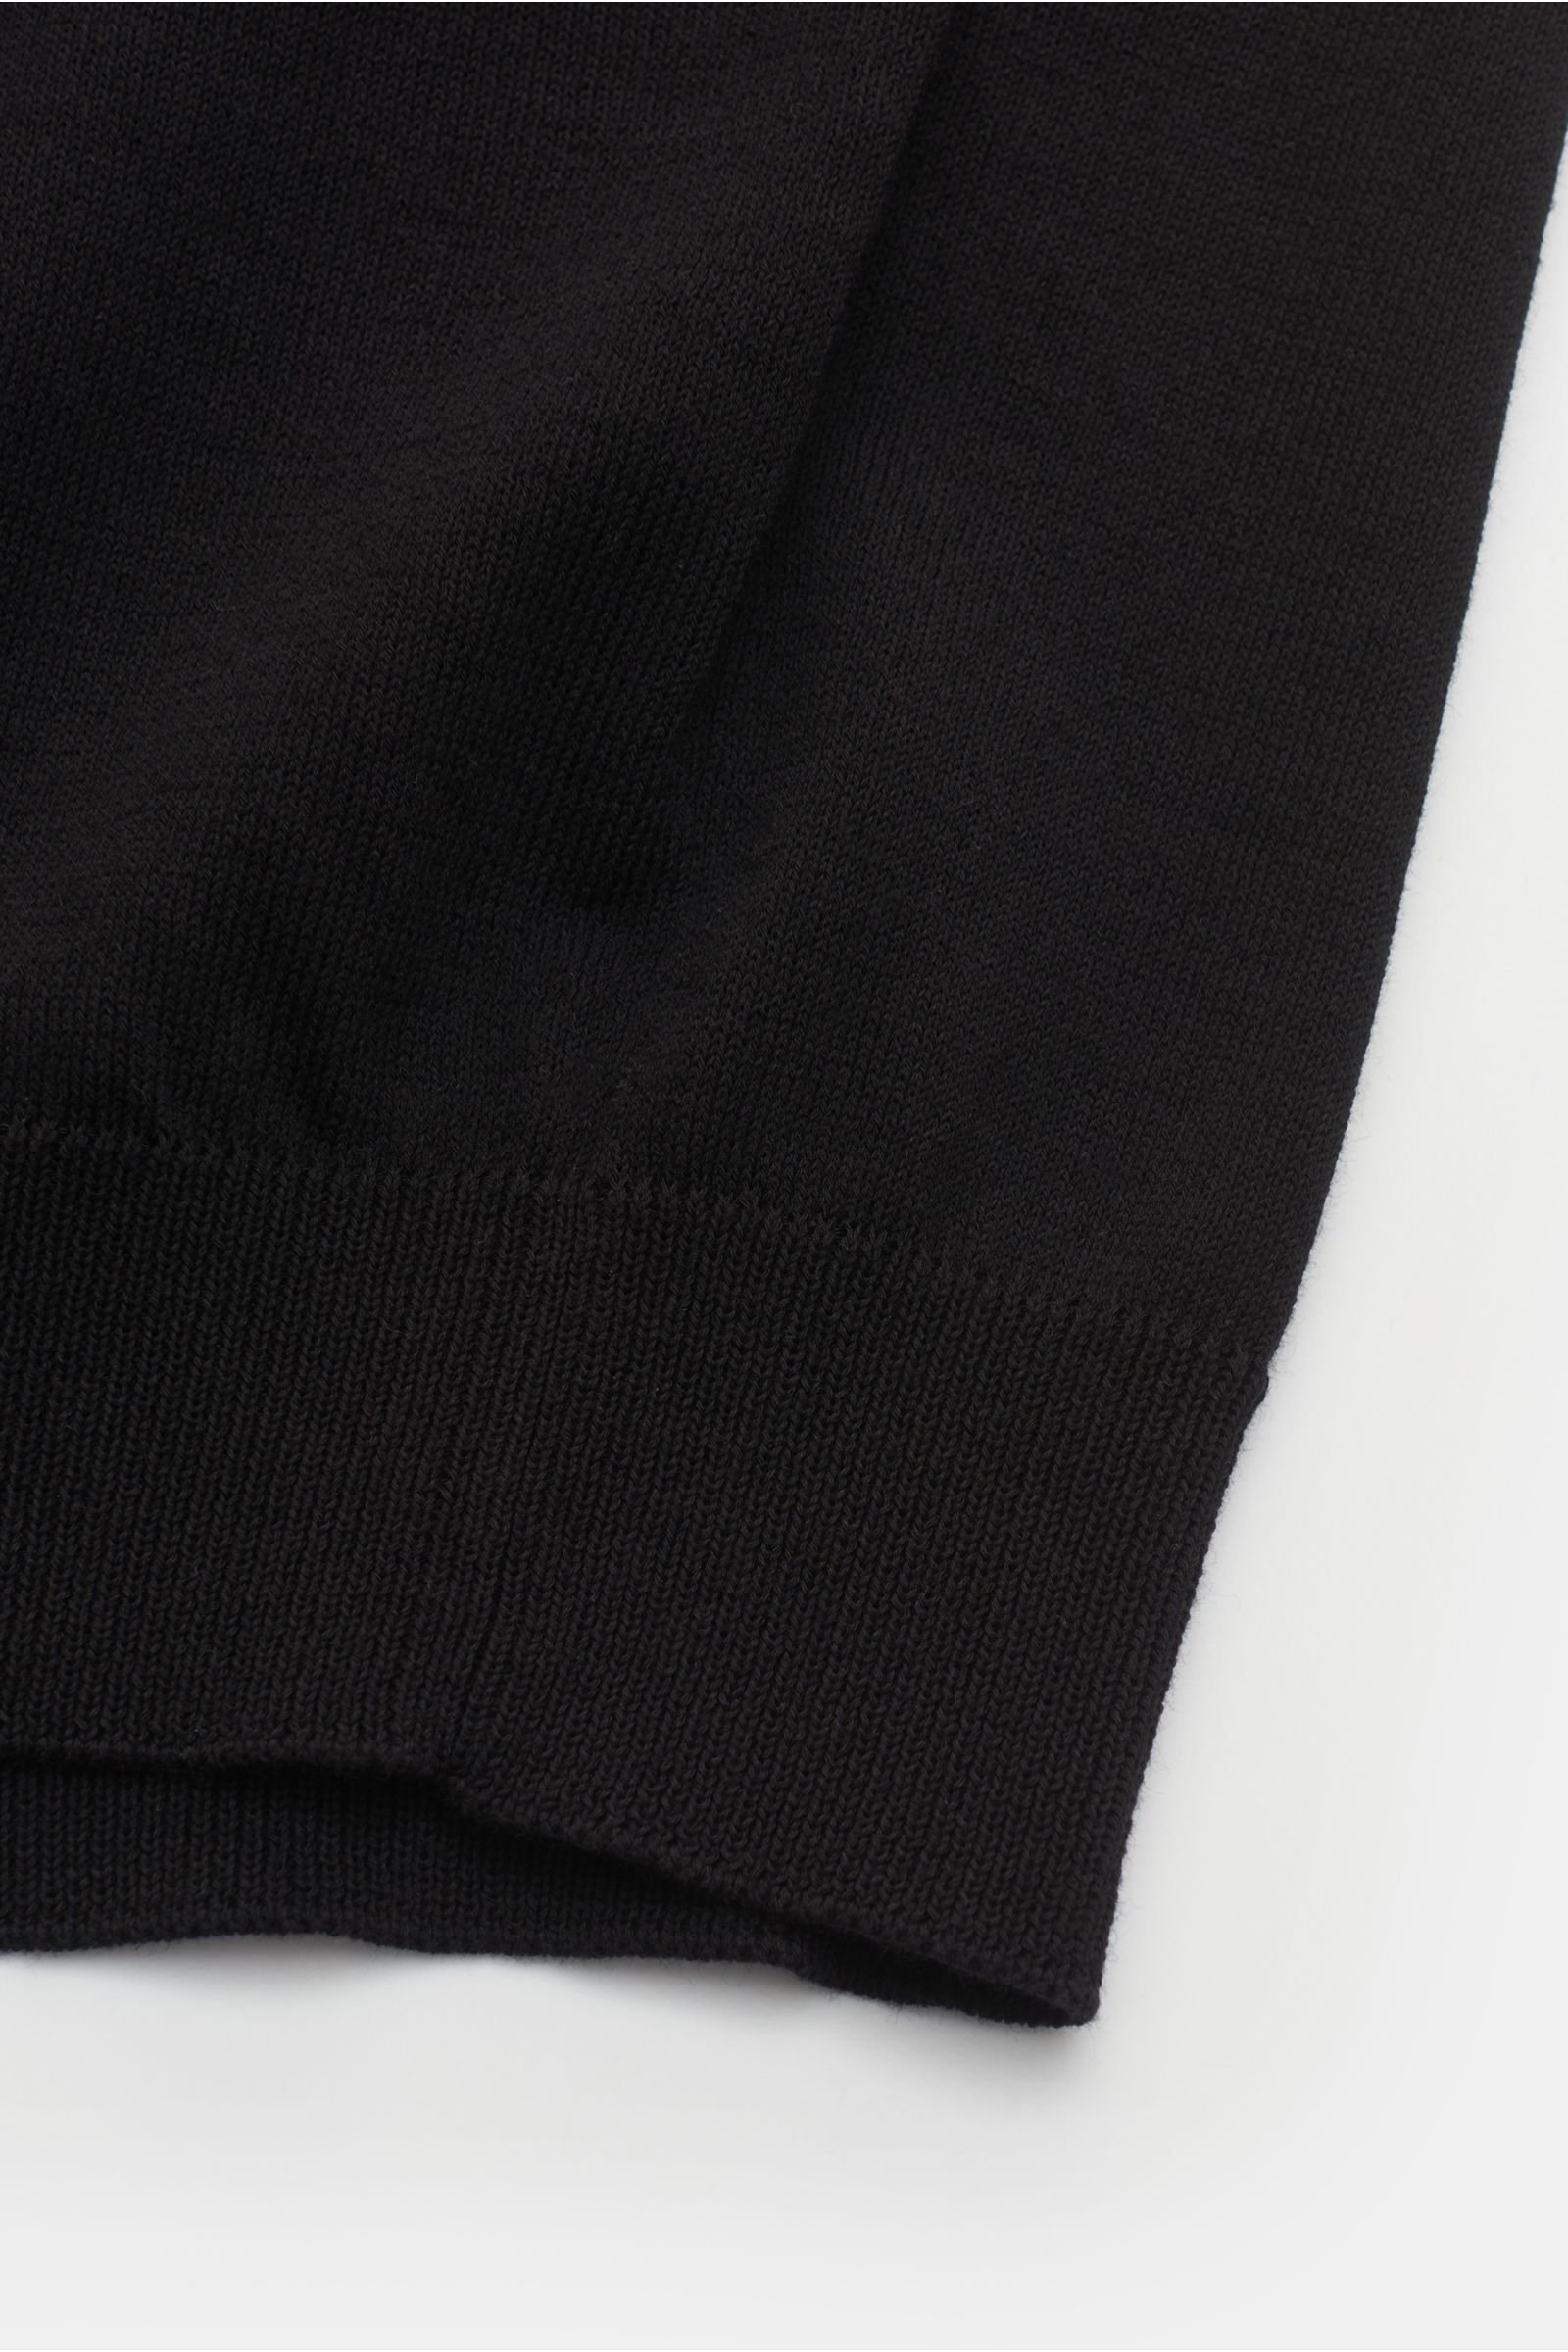 ROBERTO COLLINA short sleeve knit polo black | BRAUN Hamburg